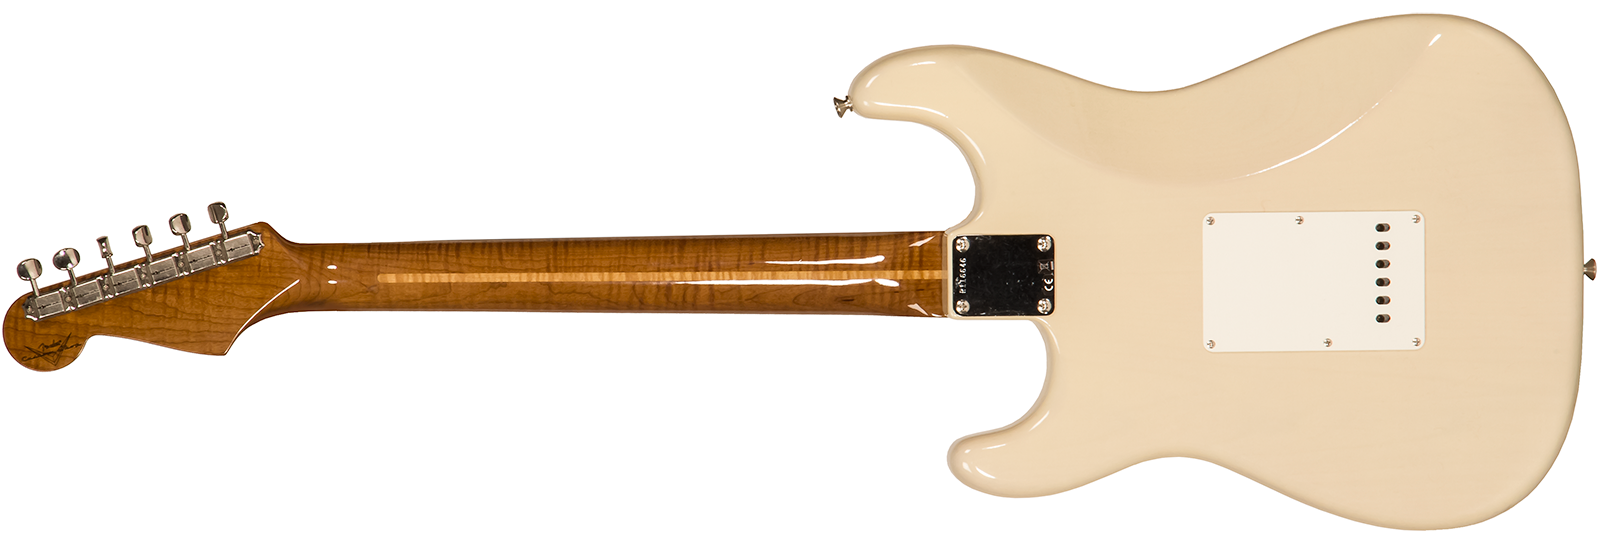 Fender Custom Shop Strat 1957 3s Trem Mn #r116646 - Lush Closet Classic Vintage Blonde - Elektrische gitaar in Str-vorm - Variation 1